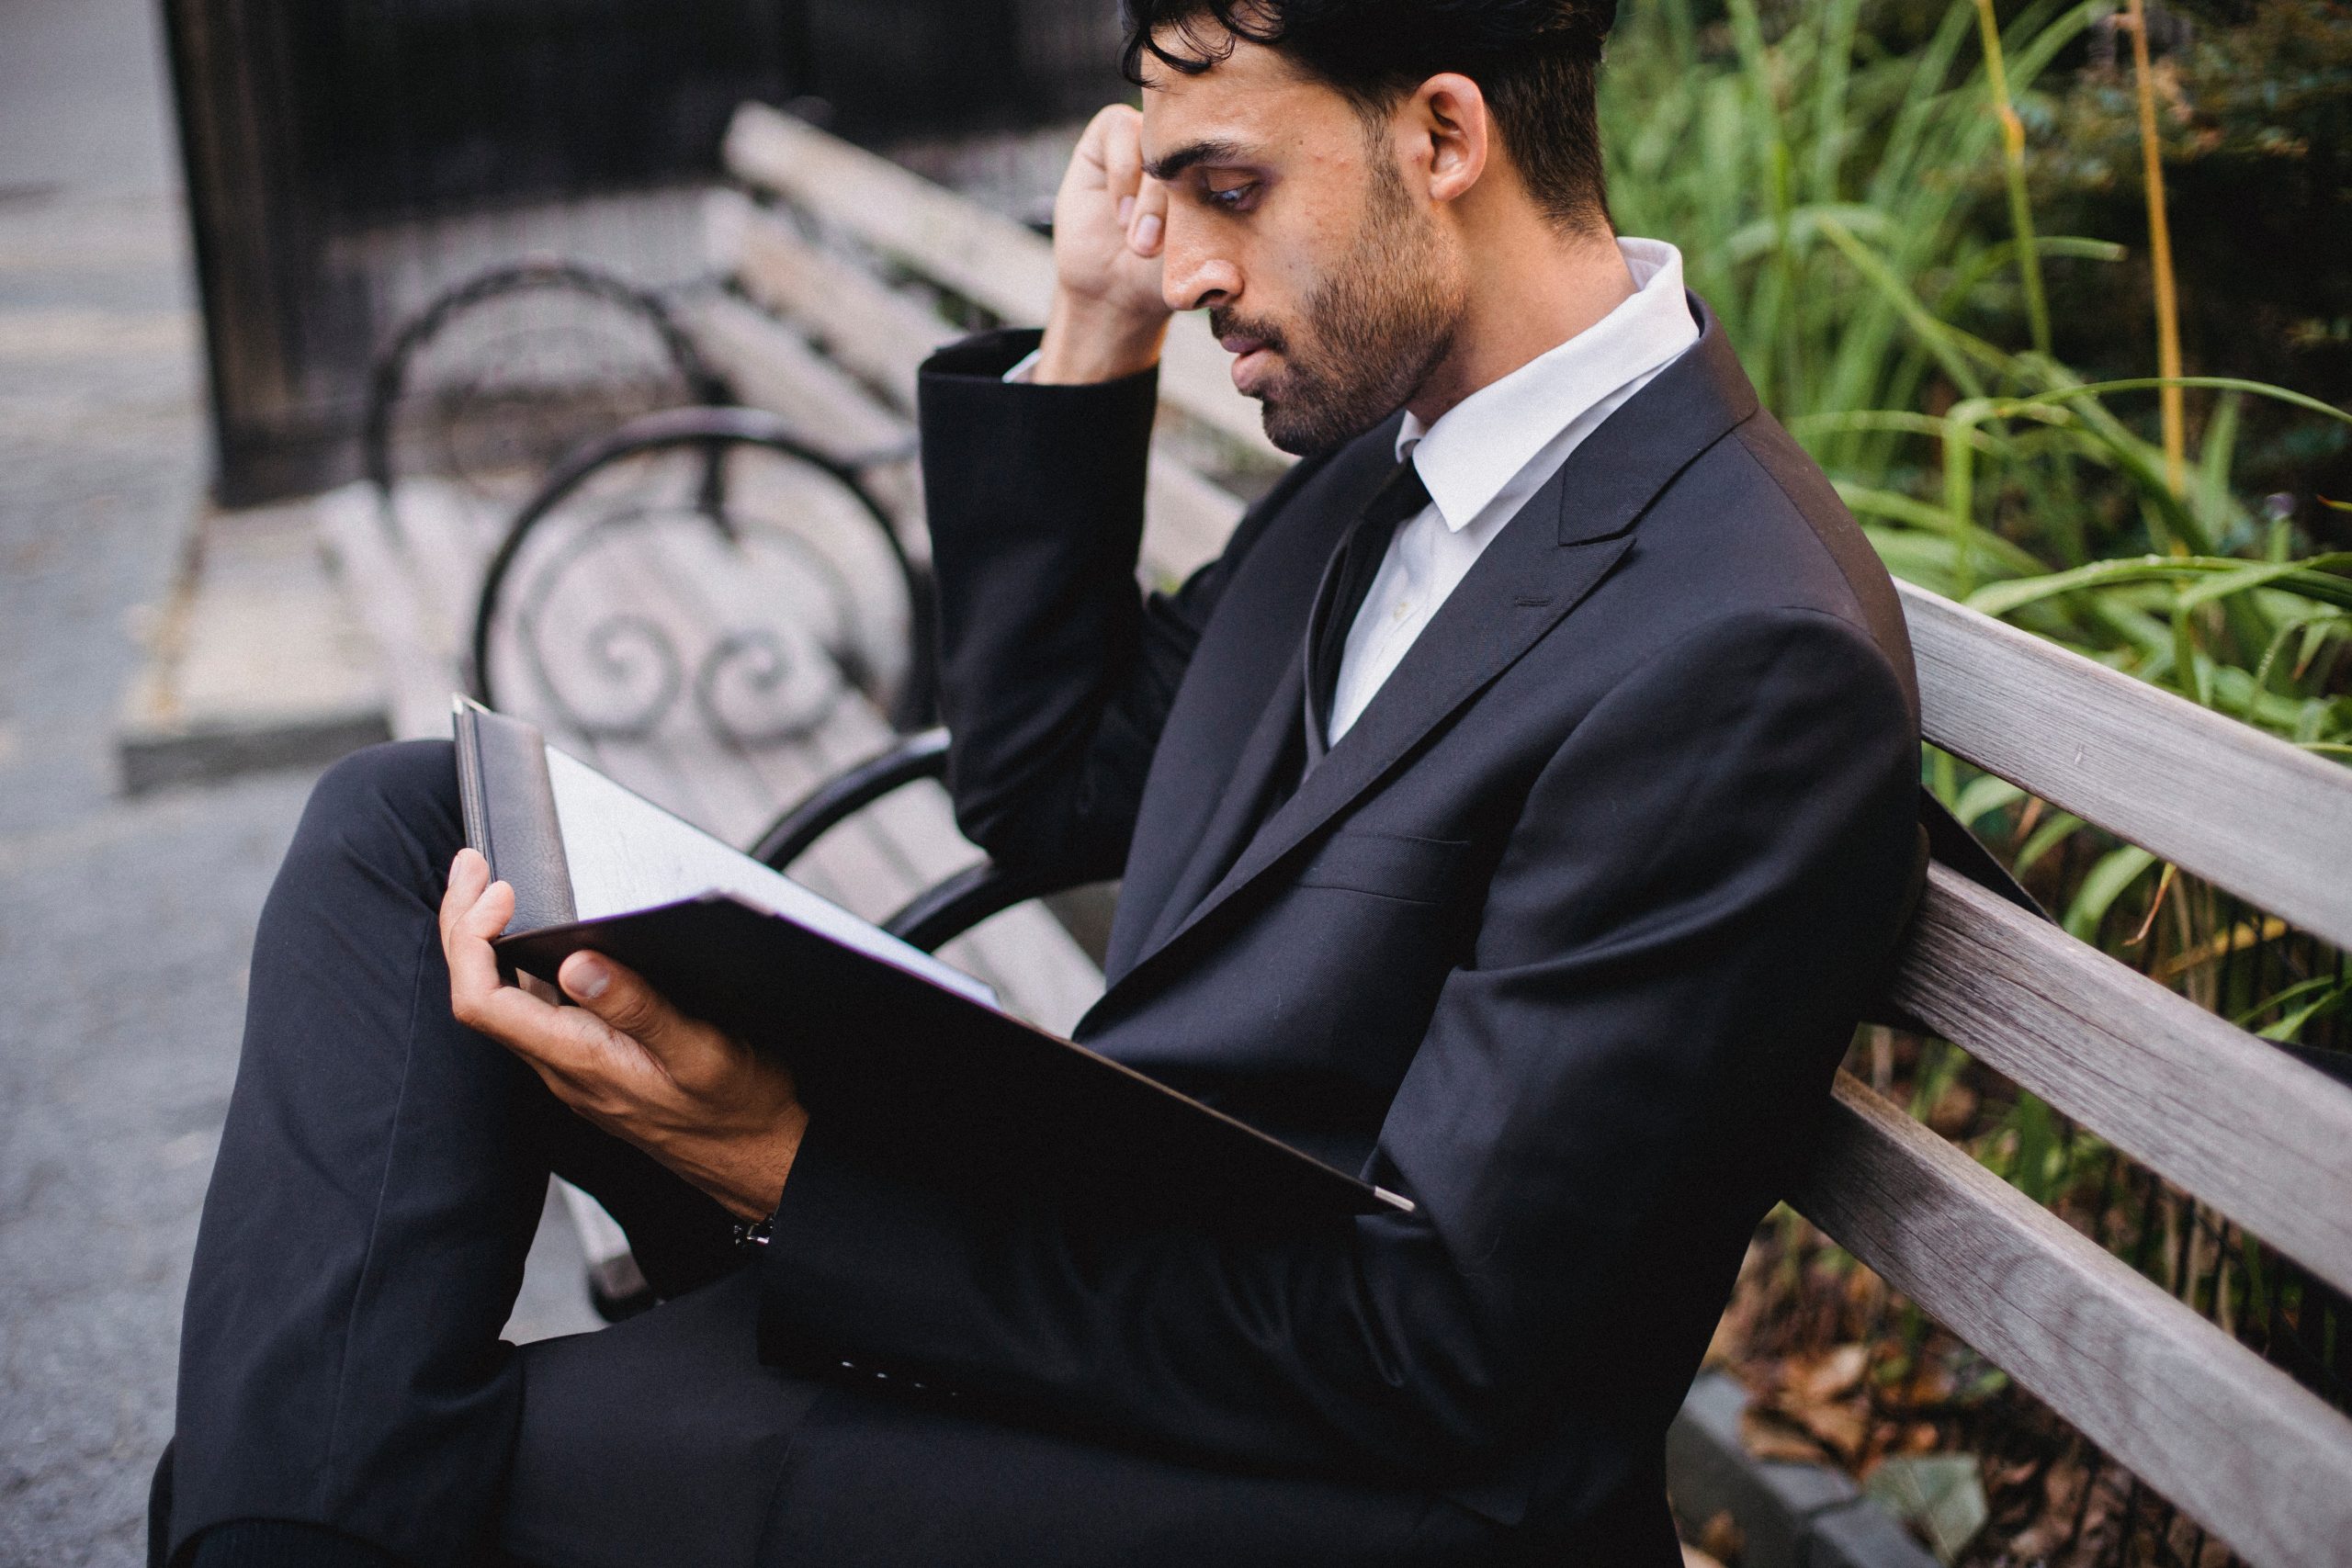 Elegant attire for a job interview – what should a man wear?